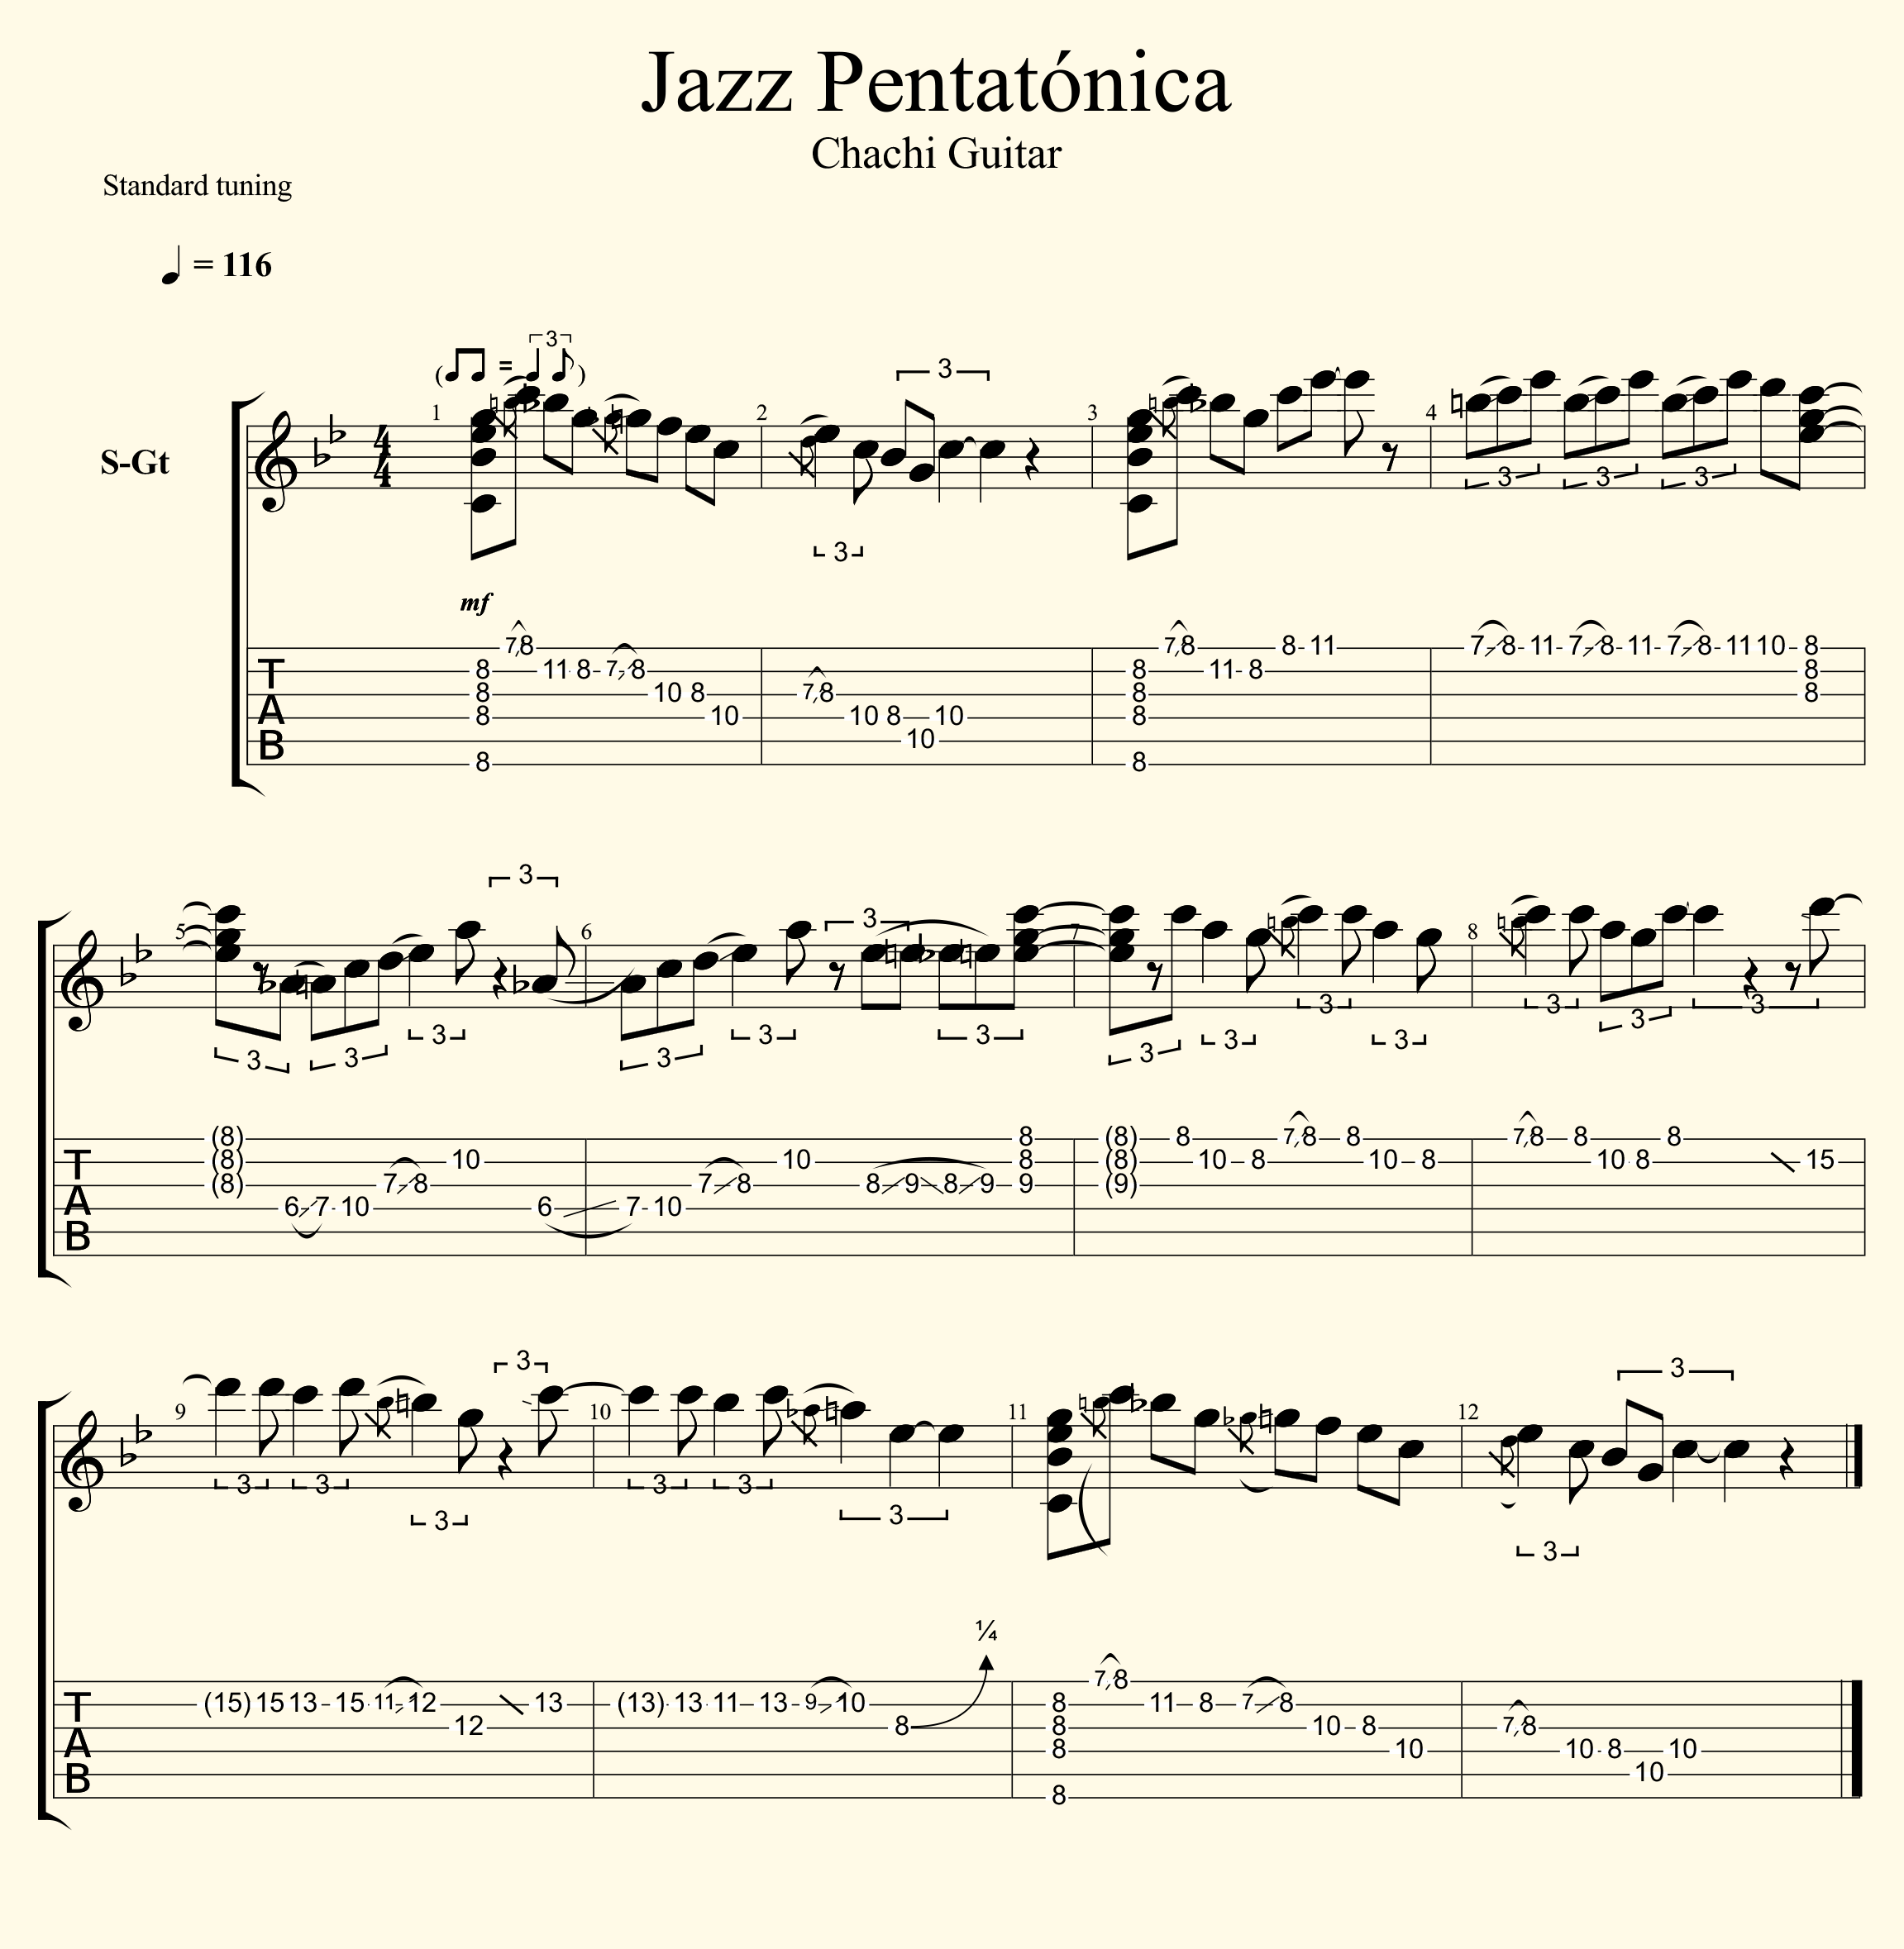 Jazz Pentatonica